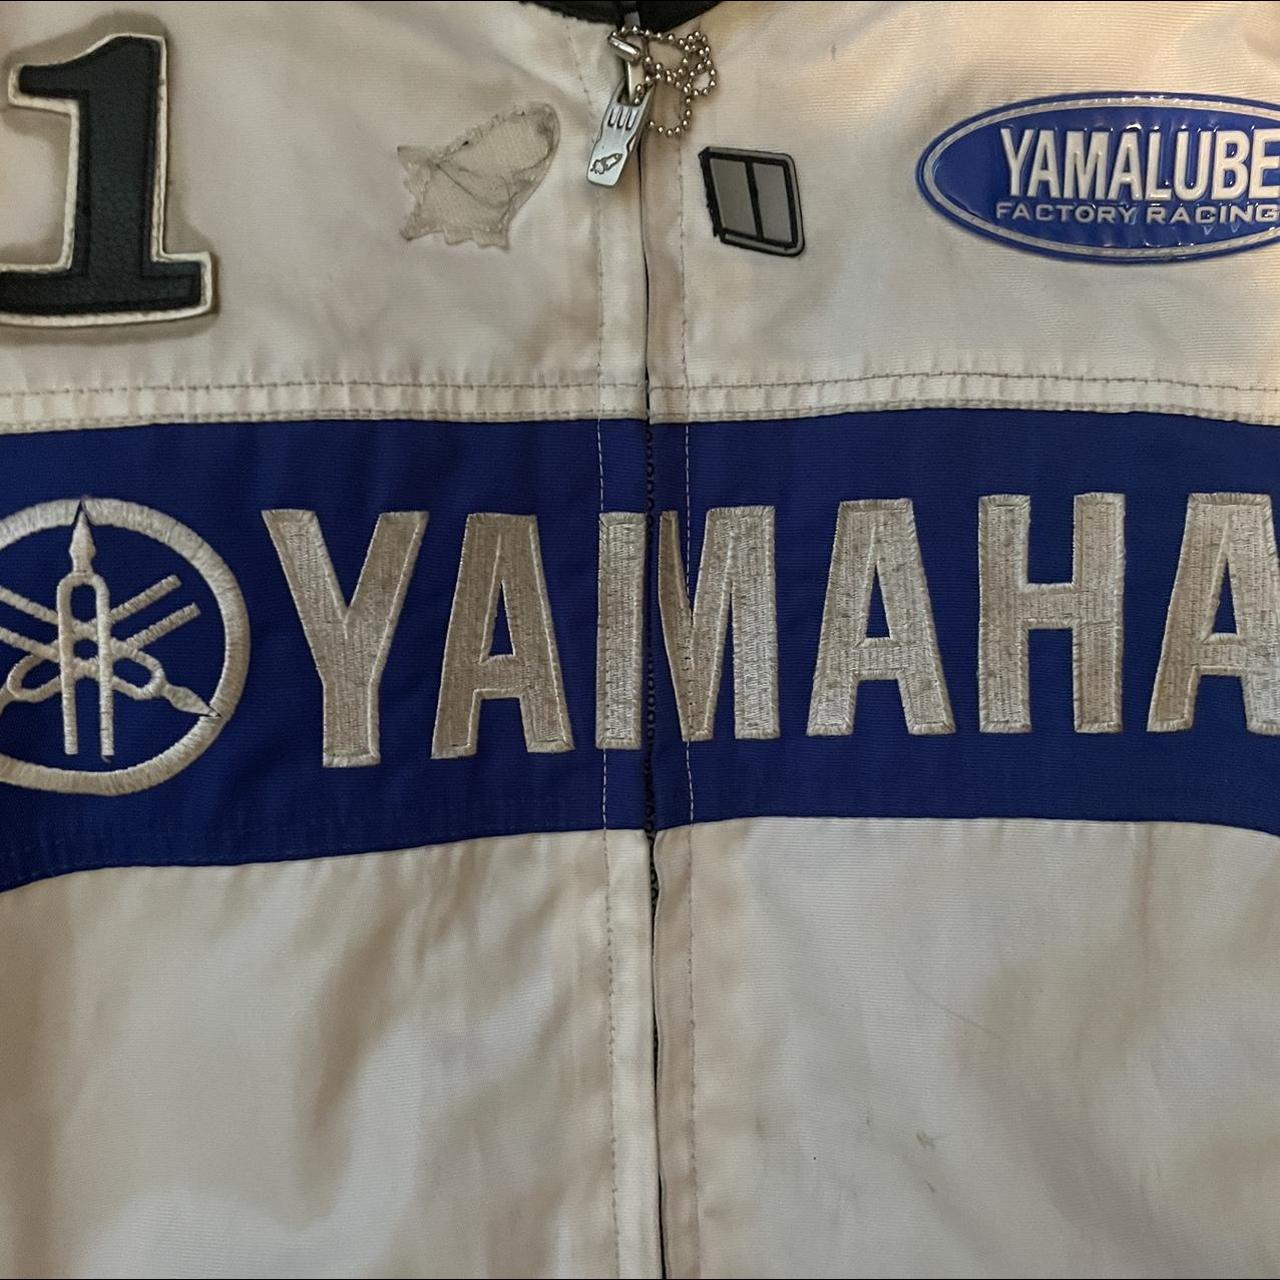 Joe rocket Yamaha racing jacket - Depop